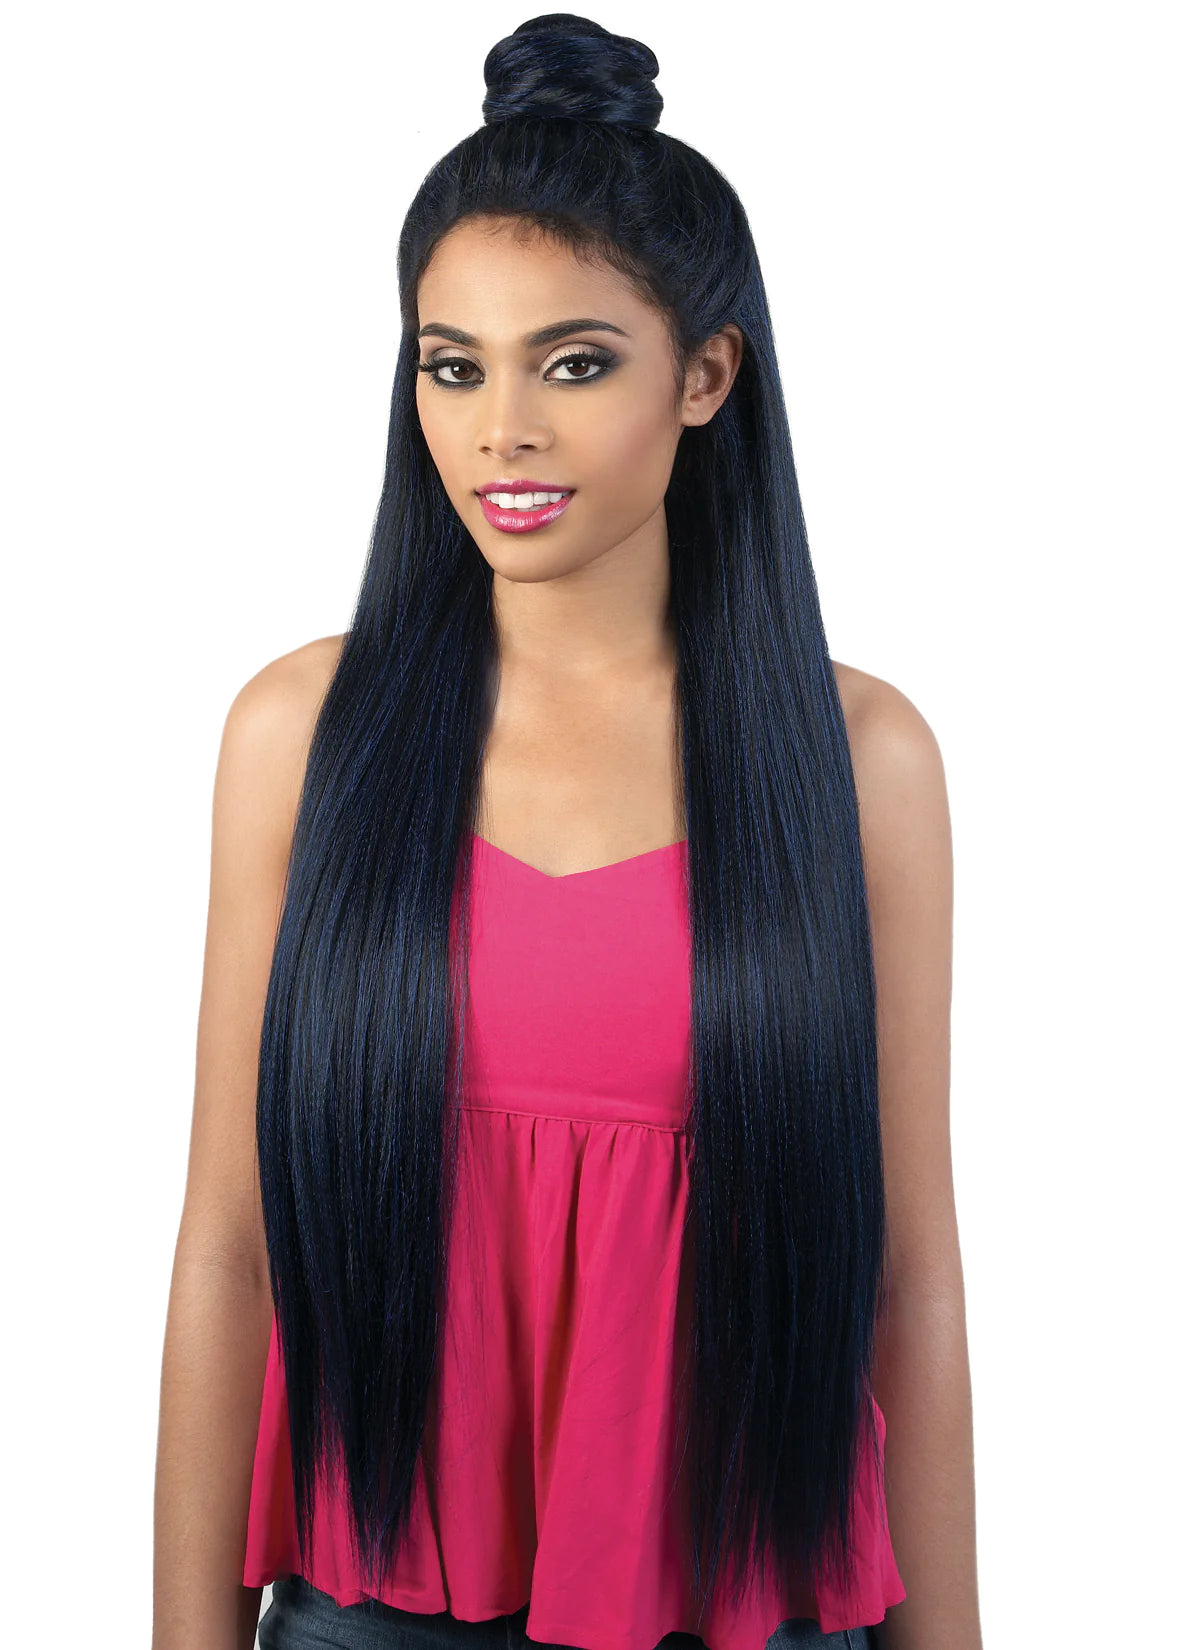 Motown Tress Human Hair Mix 360 Lace Wig HB360L Ace